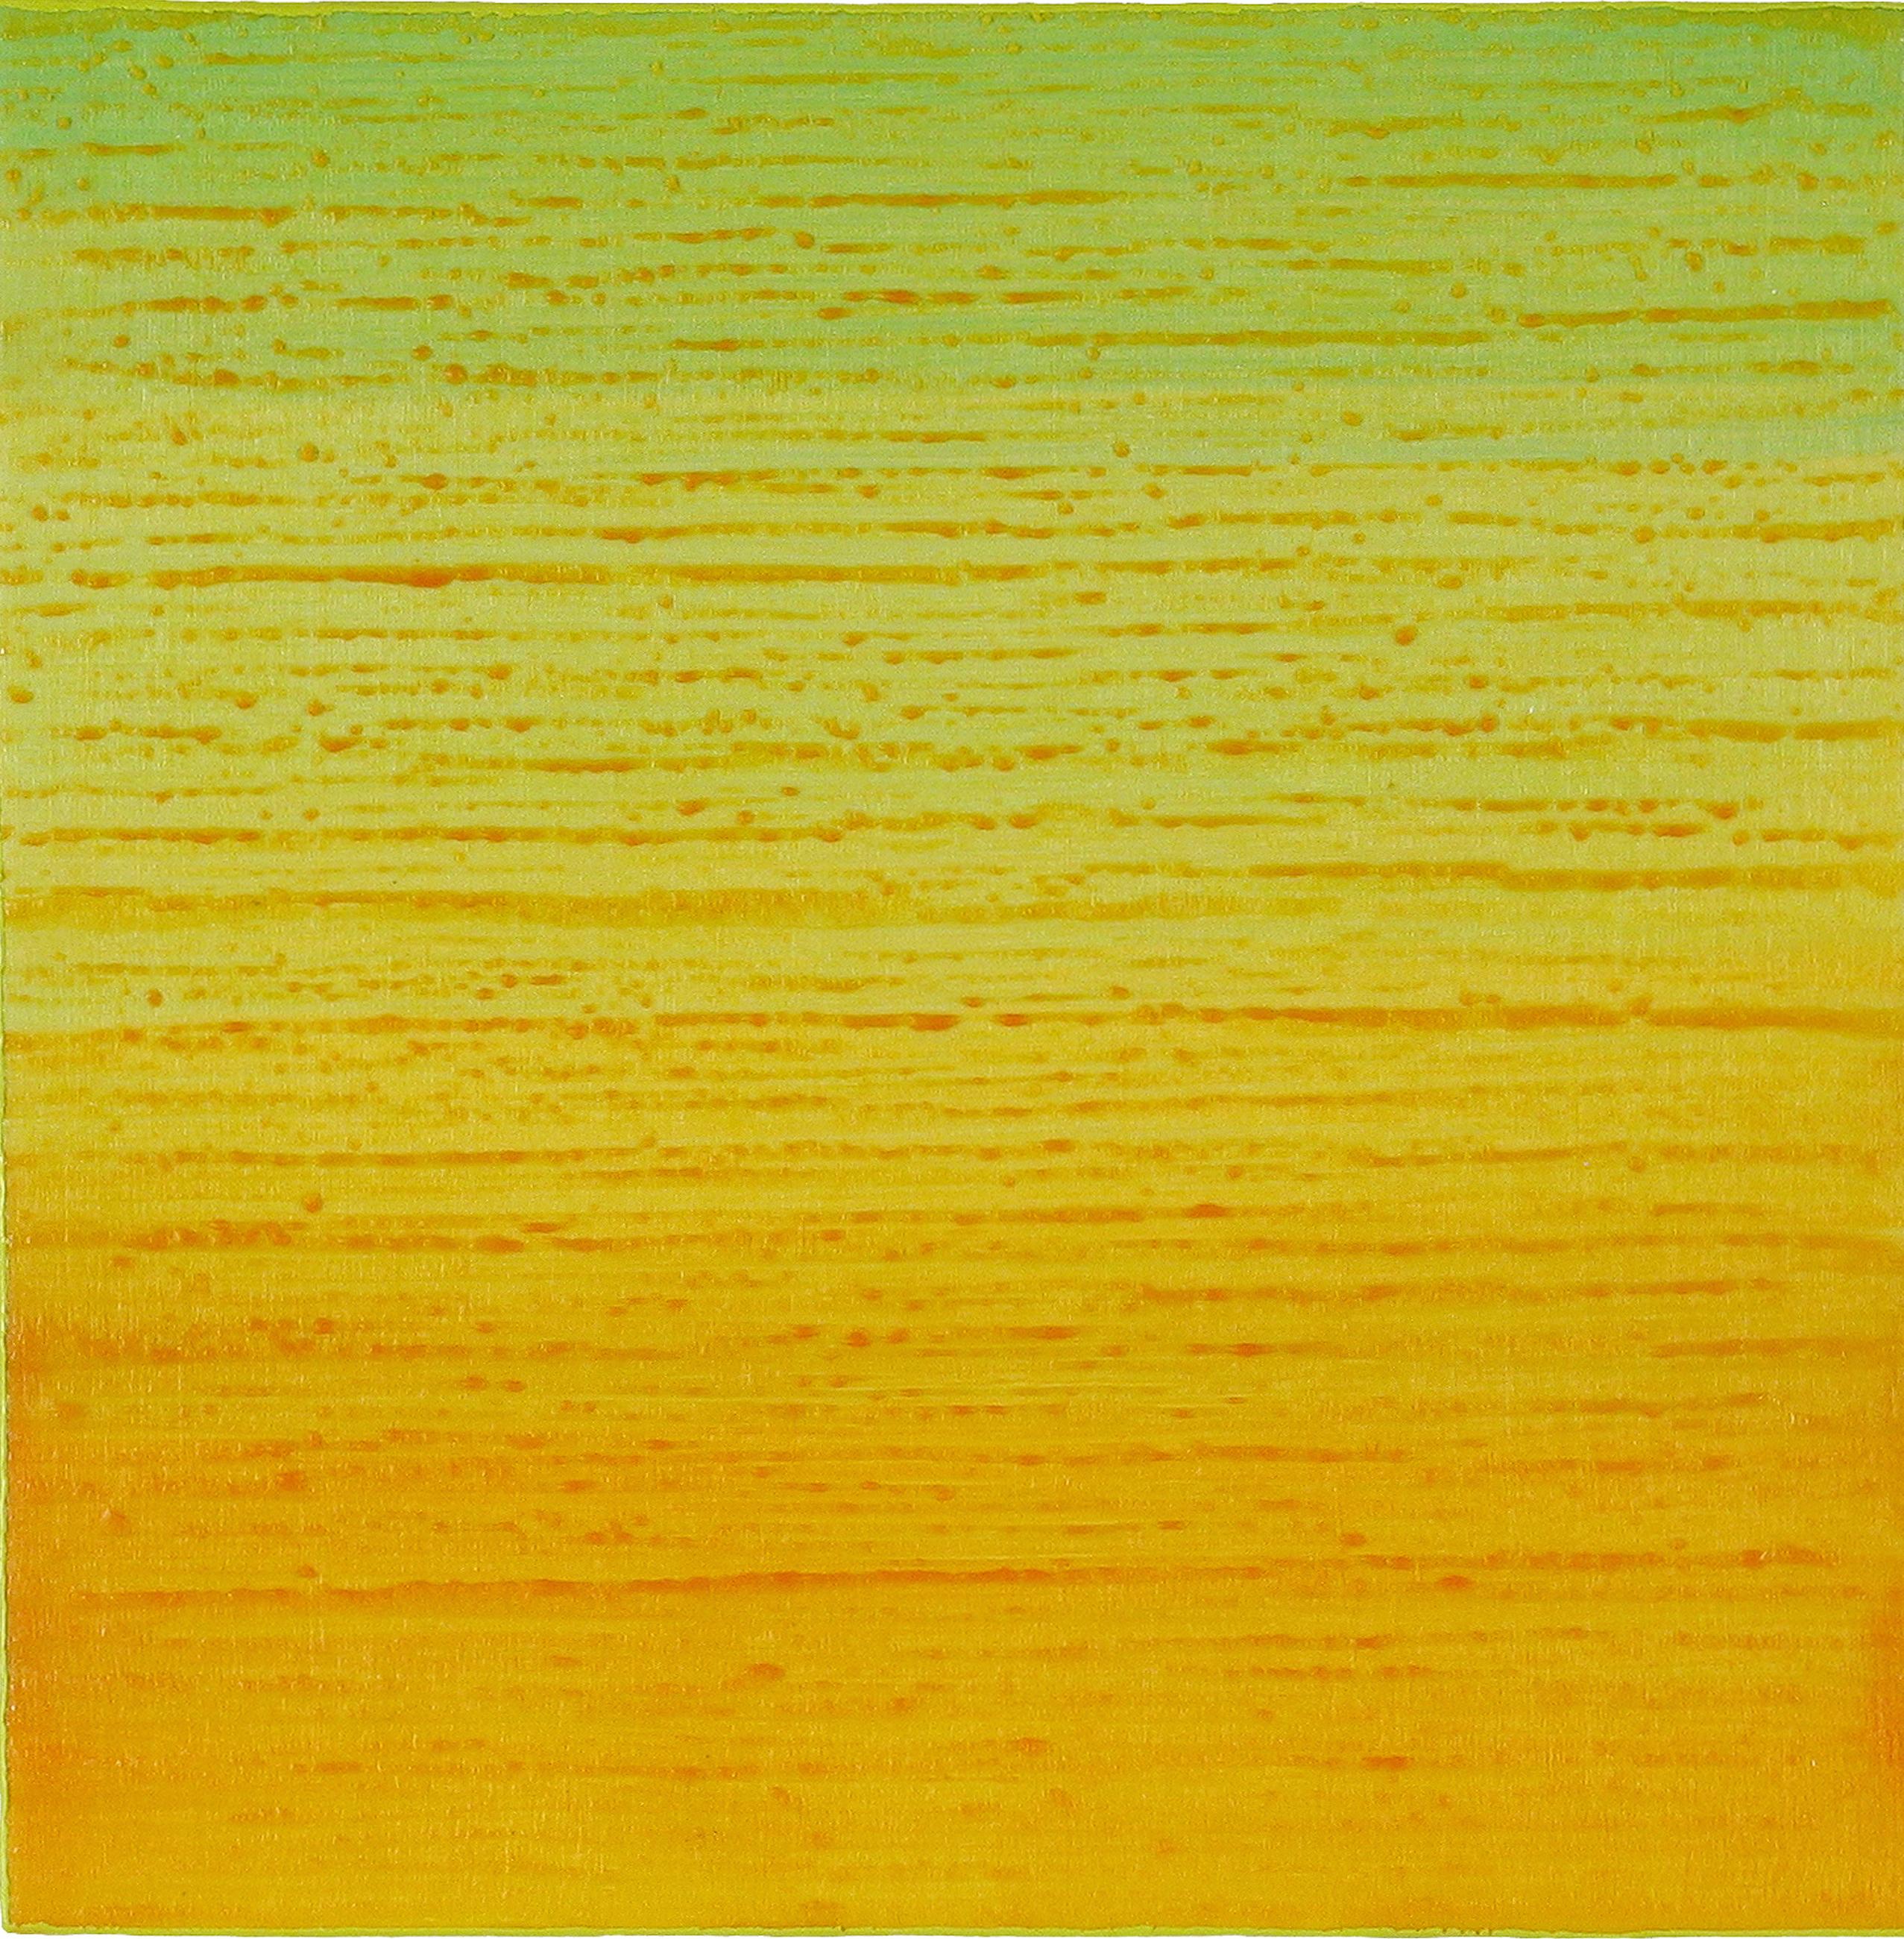 Abstract Painting Joanne Mattera - Peinture carrée « Silk Road 252 » en couleur cire, vert, jaune, orange